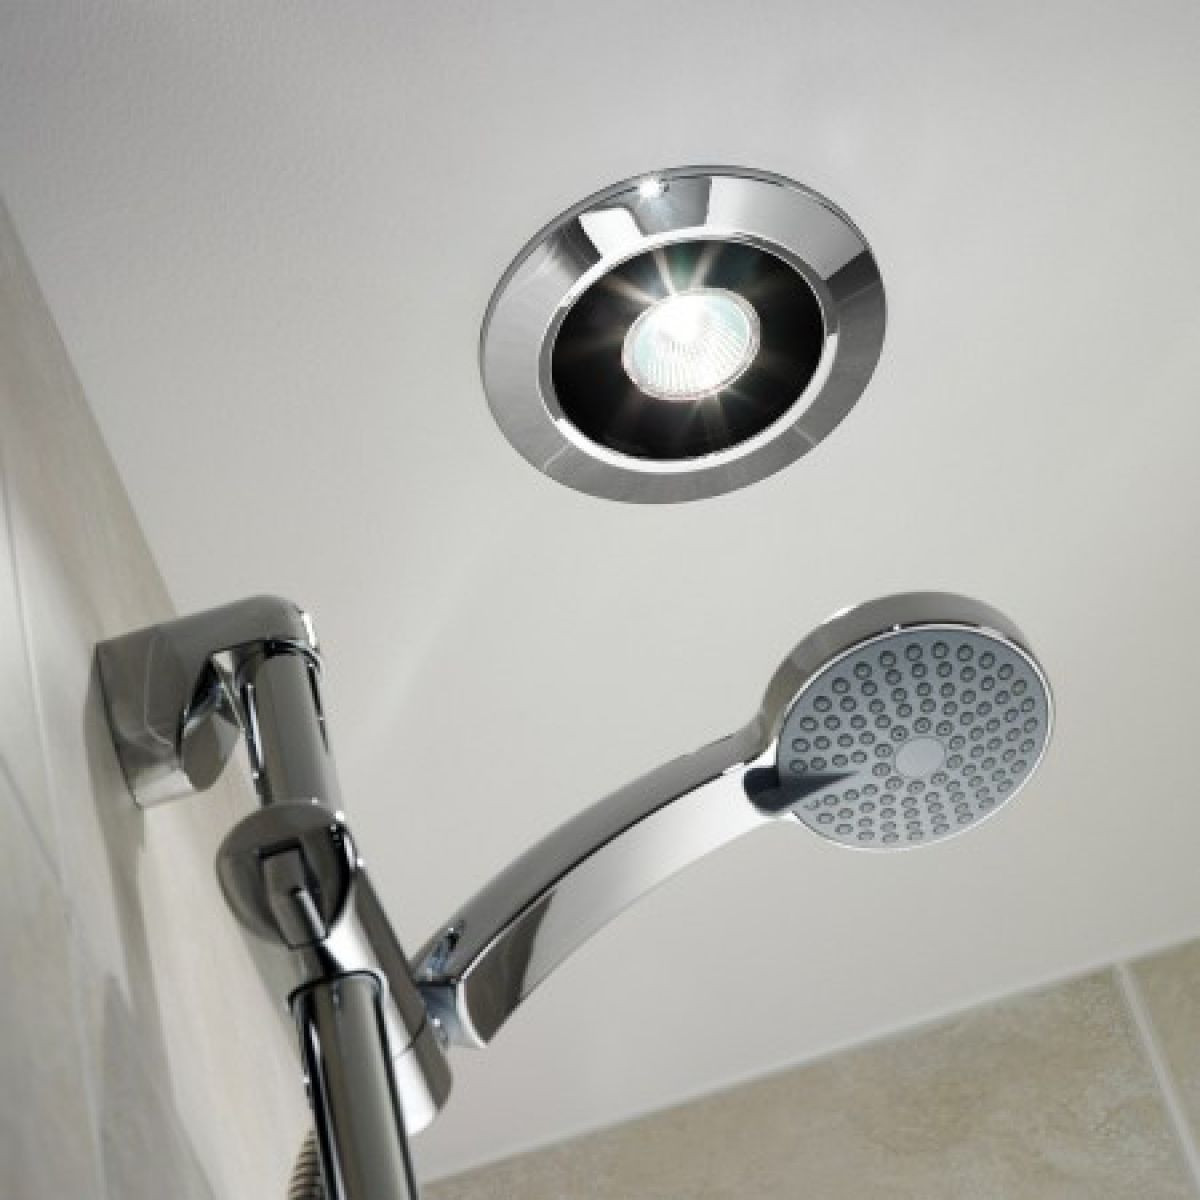 Bathroom Light And Fan
 Extractor fan bathroom ceiling mounted choosing bathroom